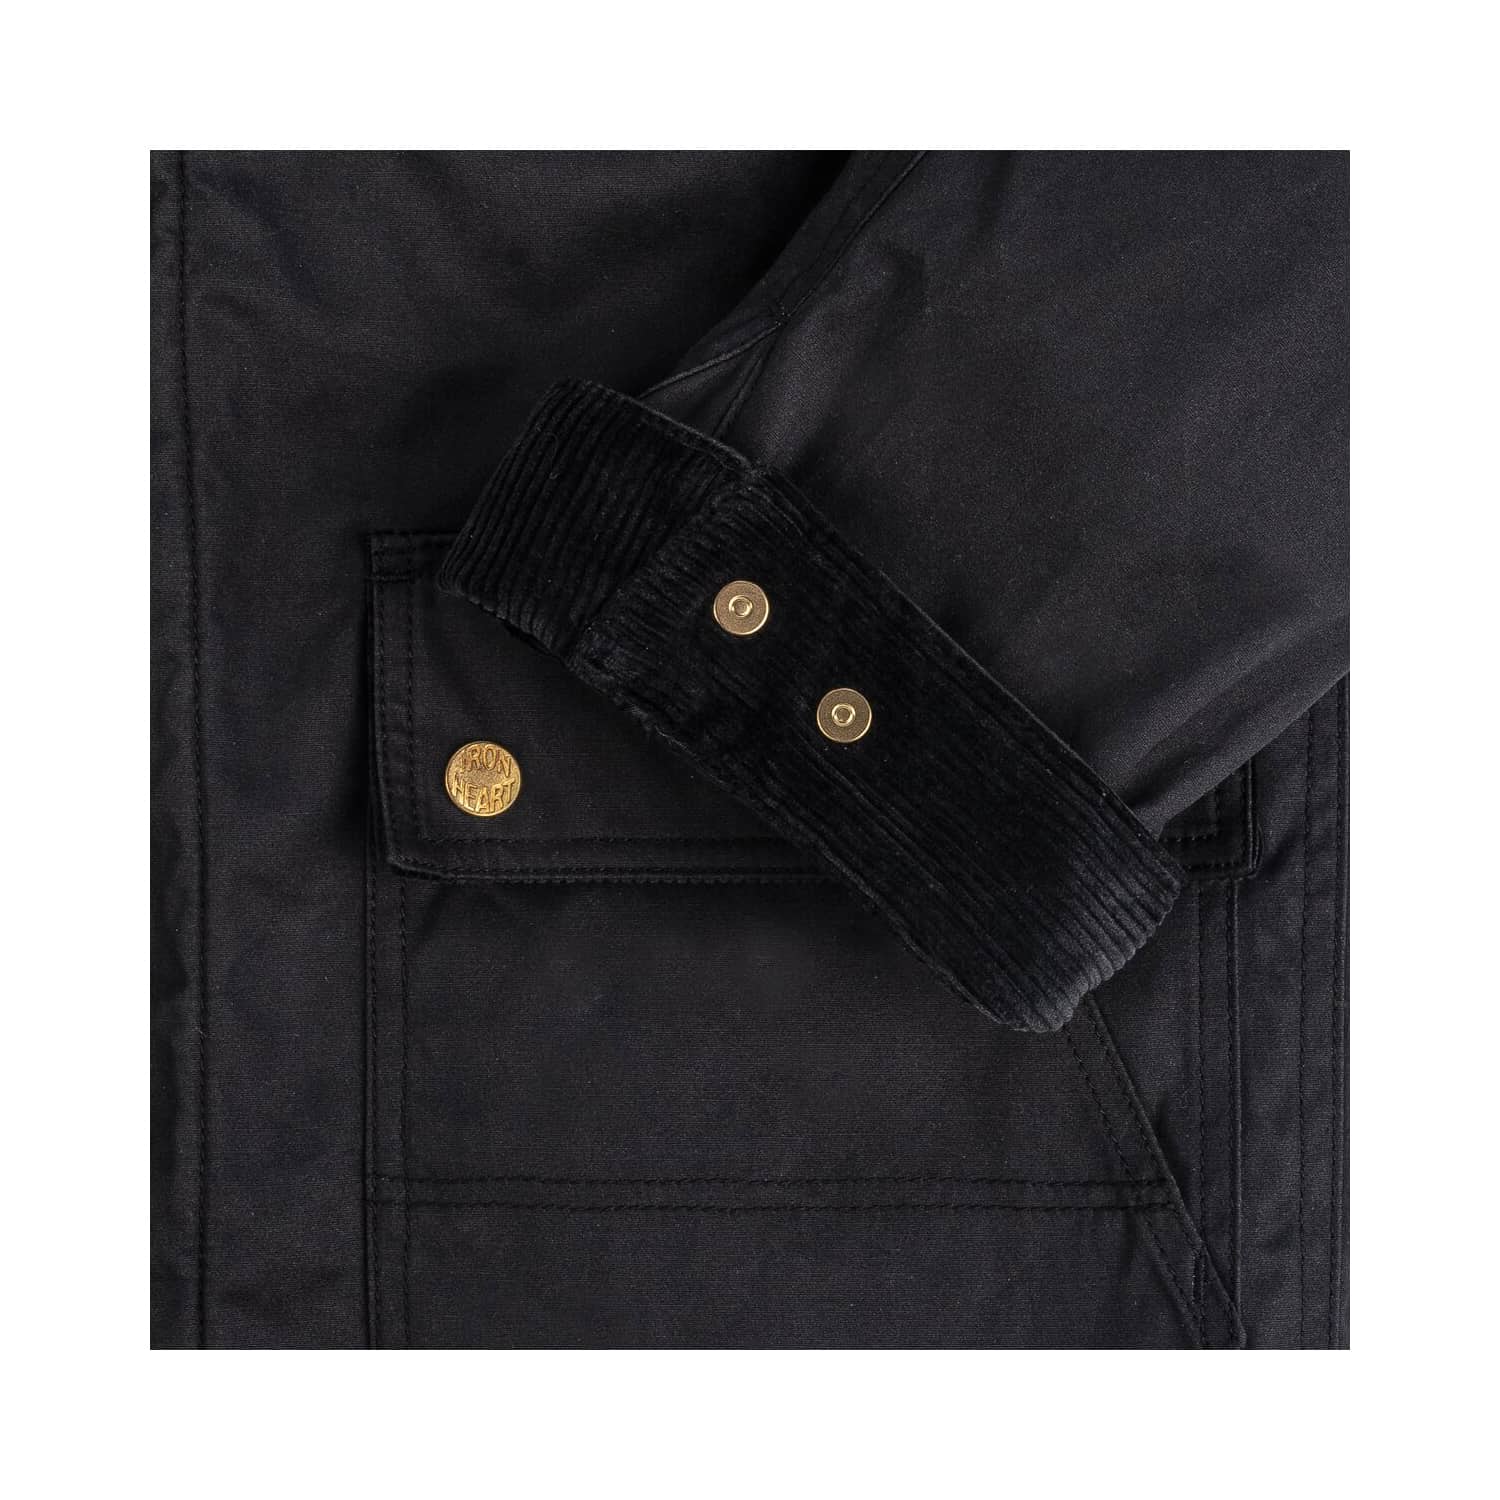 Iron Heart IHJ-114-BLK 7oz Oiled Cotton Chore Jacket Black